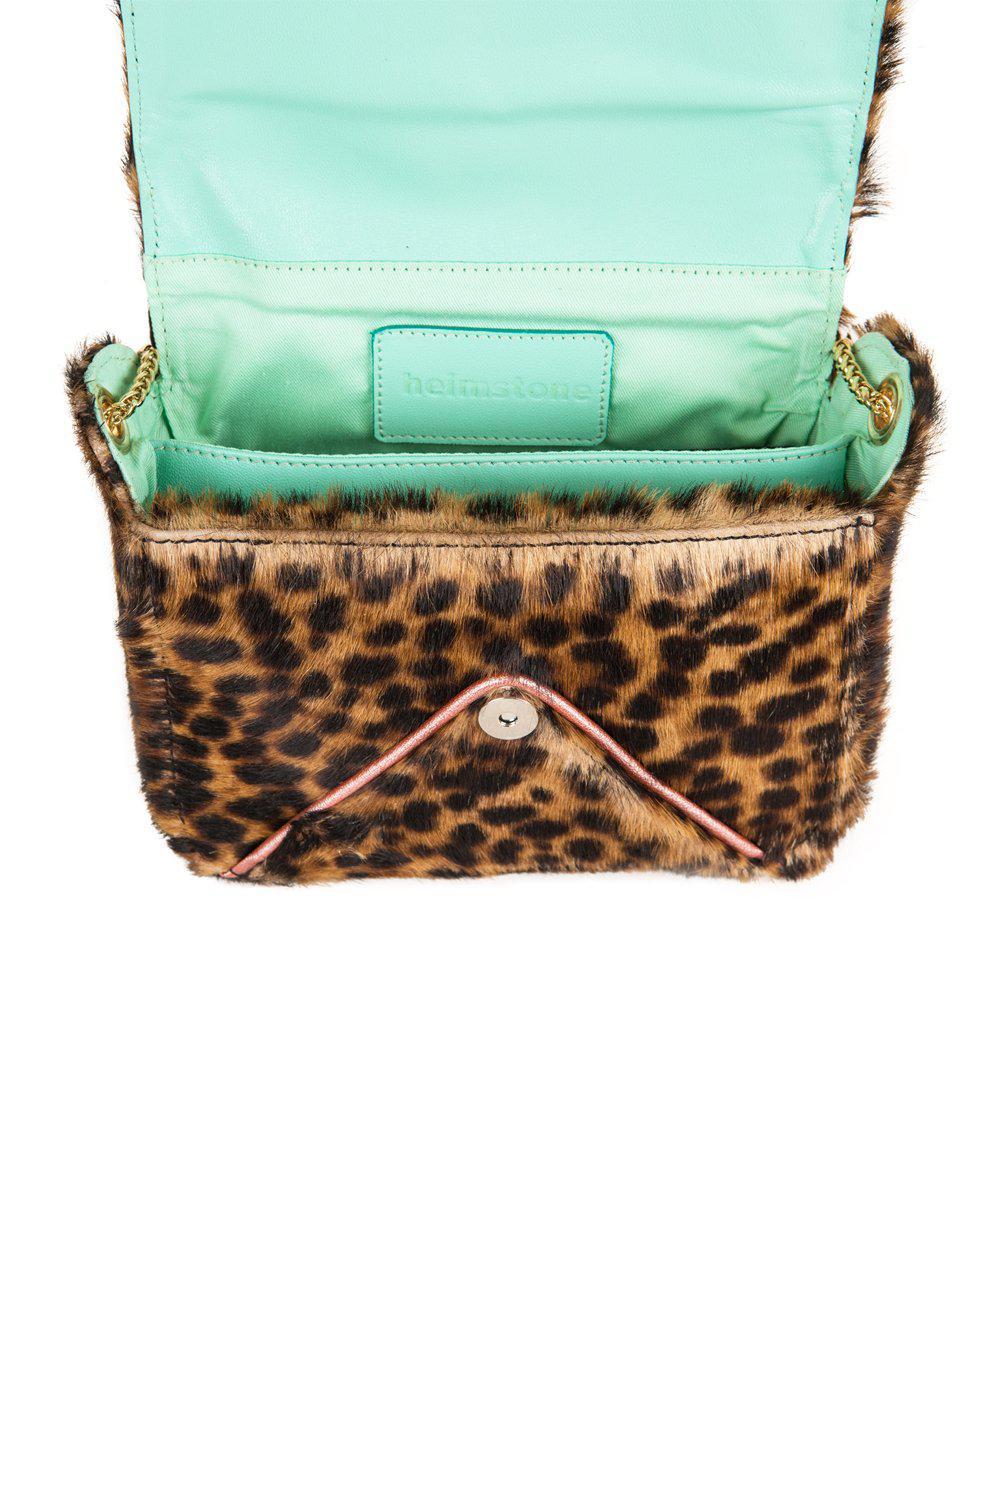 Vivian handbag in leopard printed leather